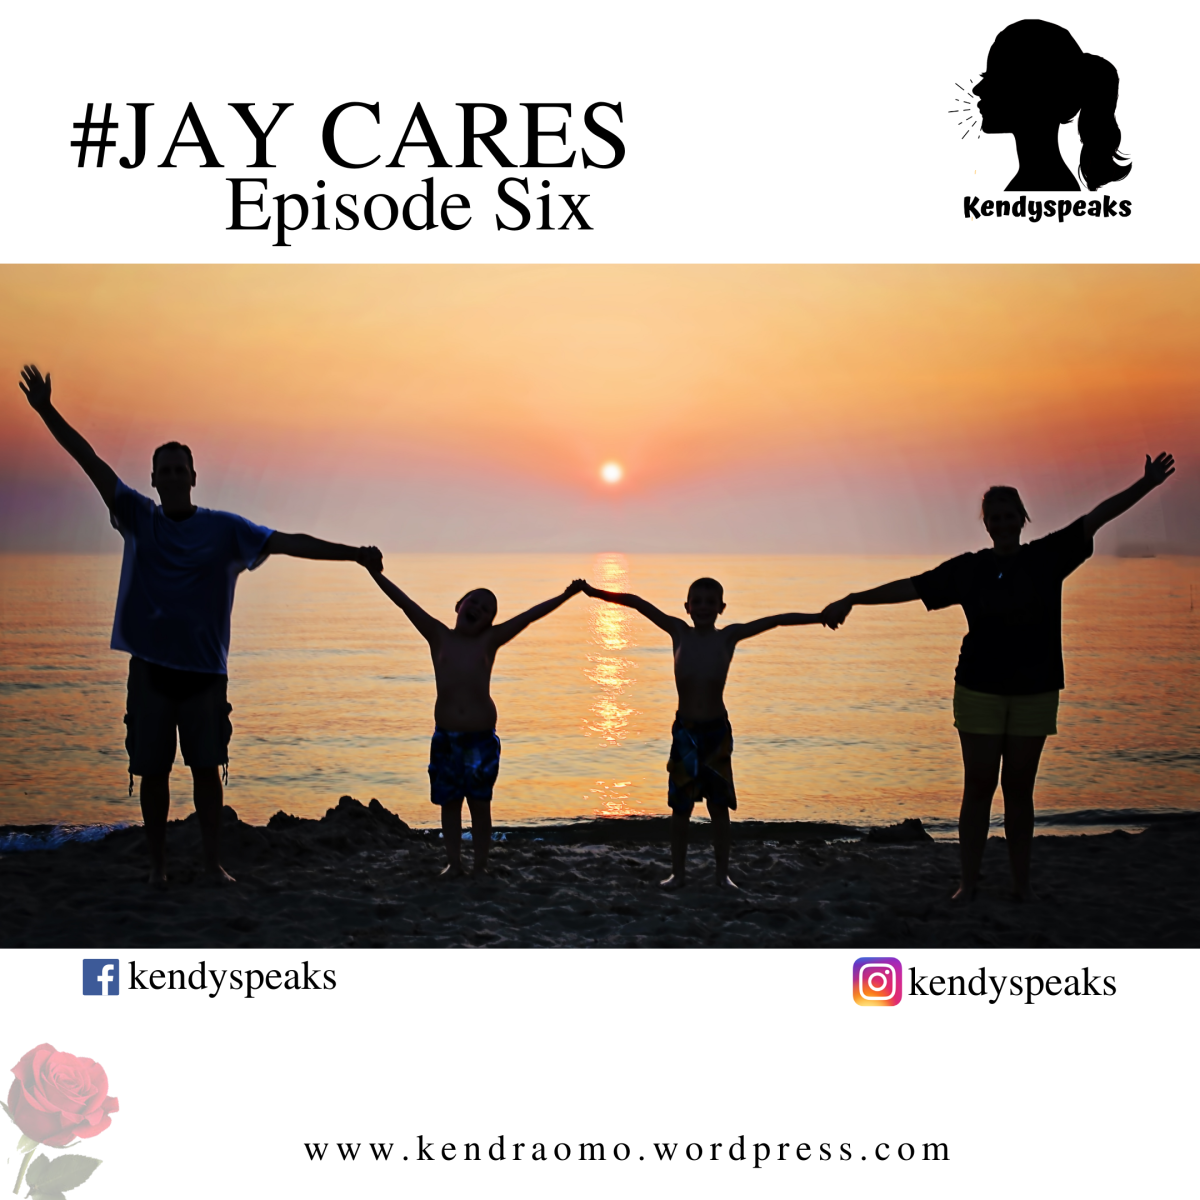 Jay Cares (Episode Six)